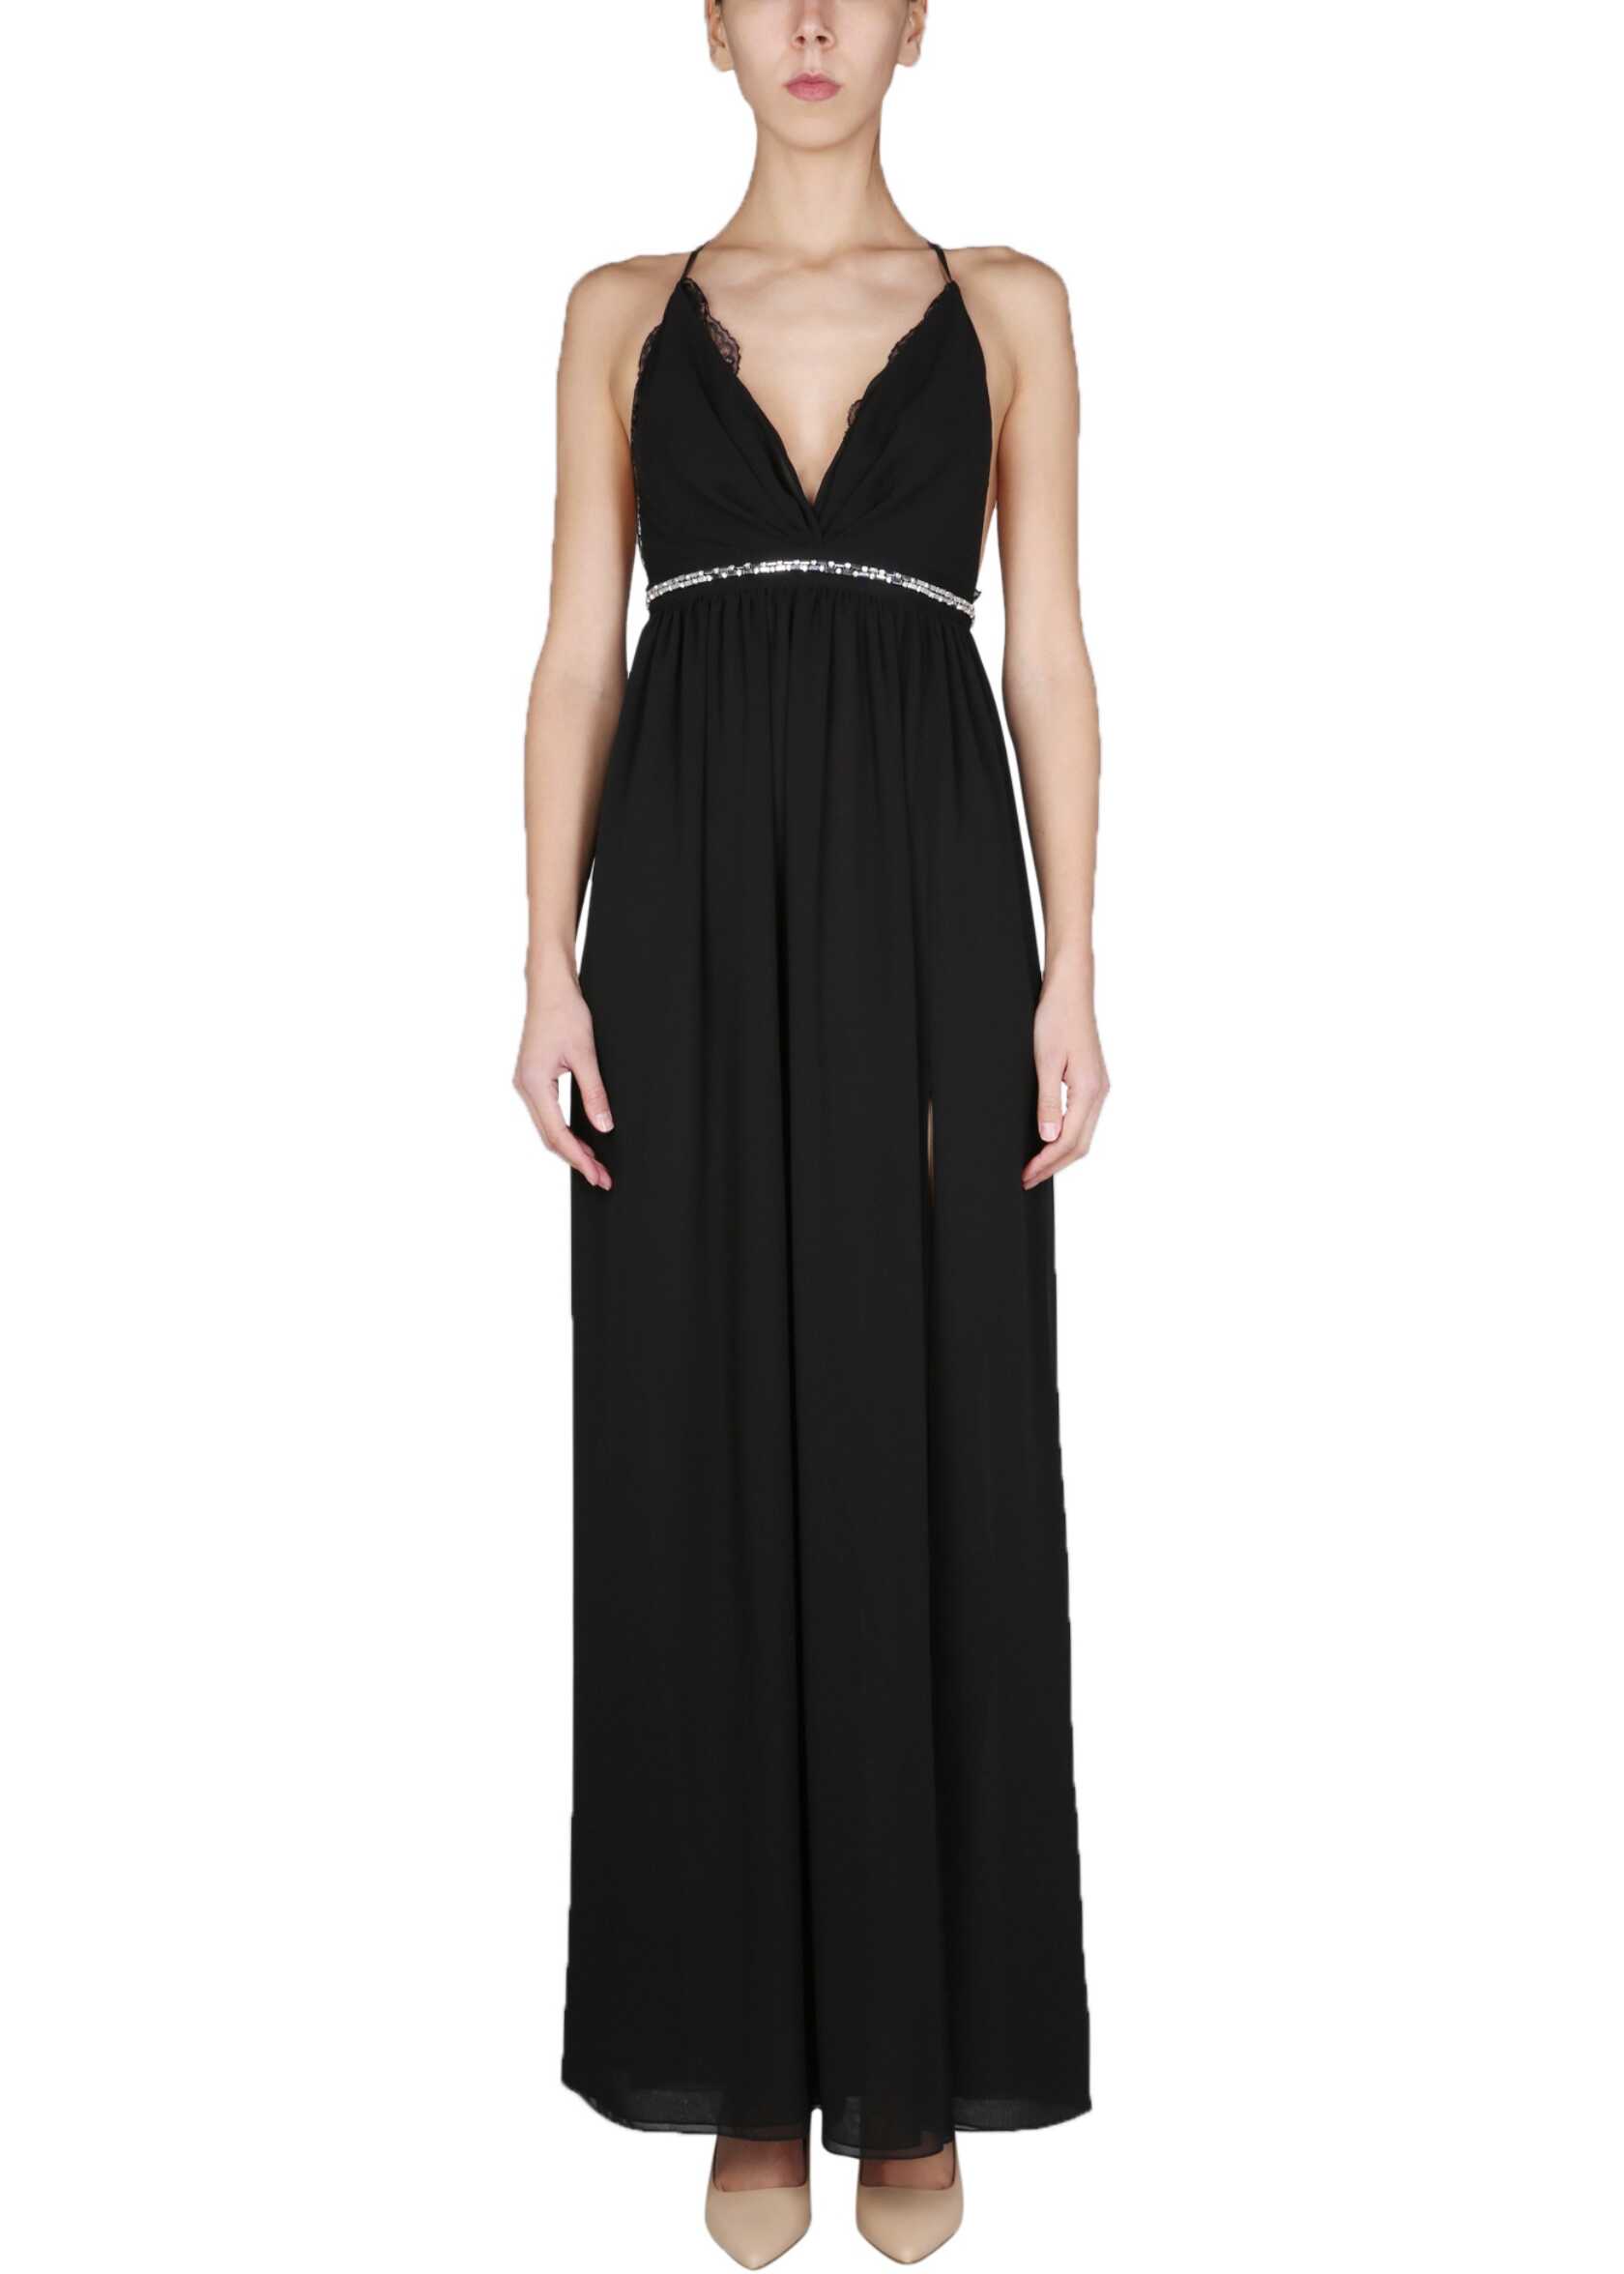 Anna Molinari Dress With Crystal Details 7A073A_N0990 BLACK